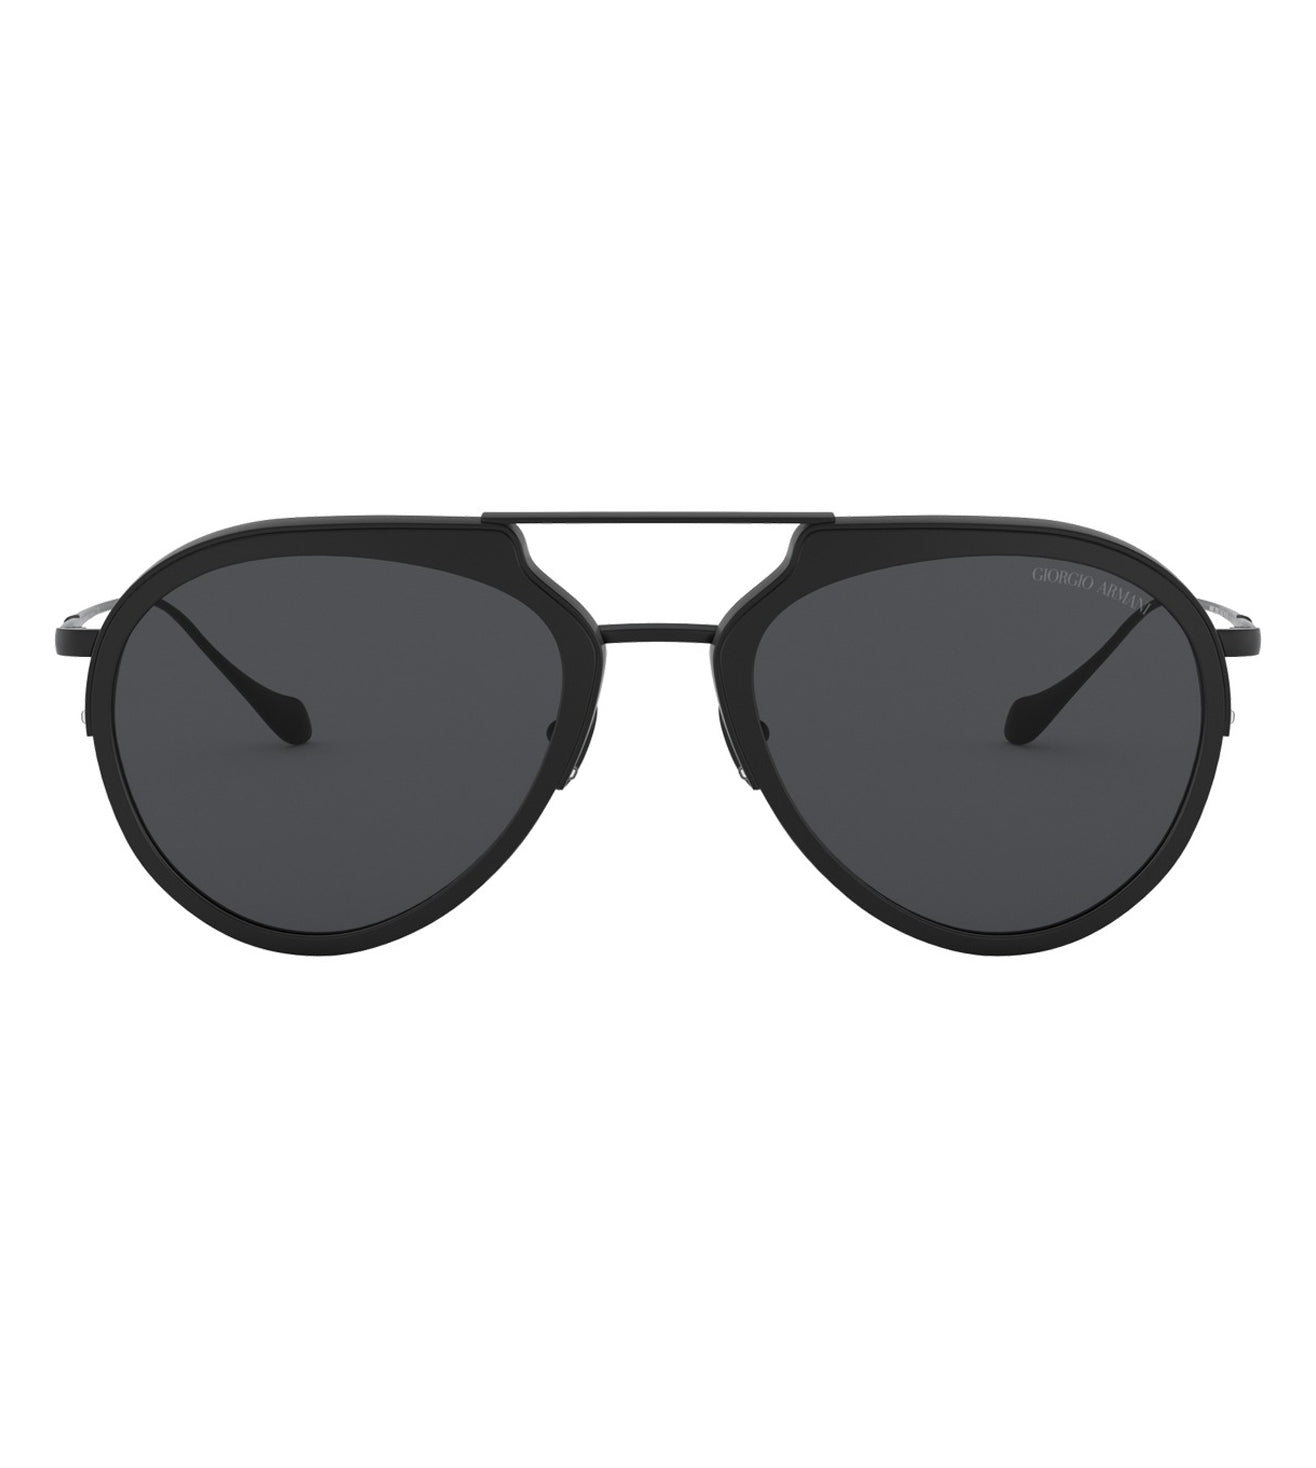 Giorgio Armani Men's Grey Aviator Sunglasses